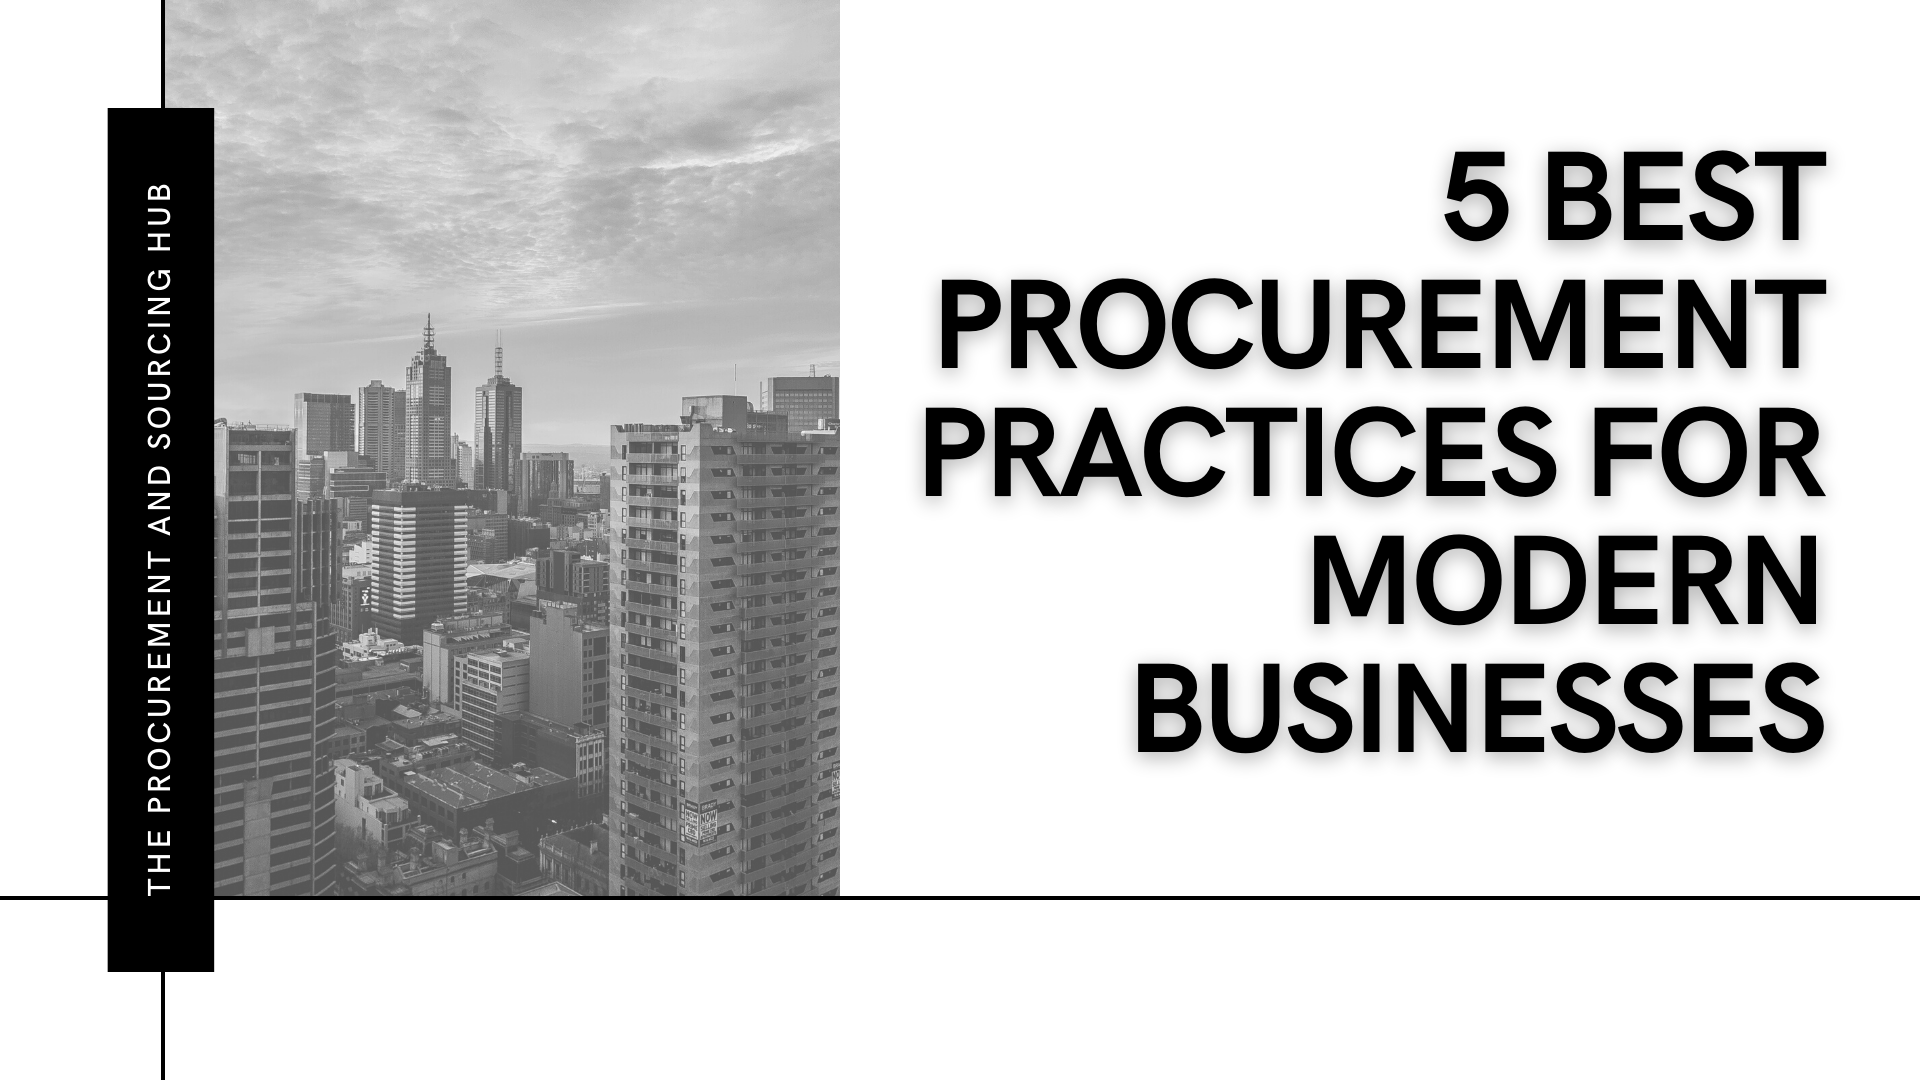 5 Best Procurement Practices for Modern Businesses